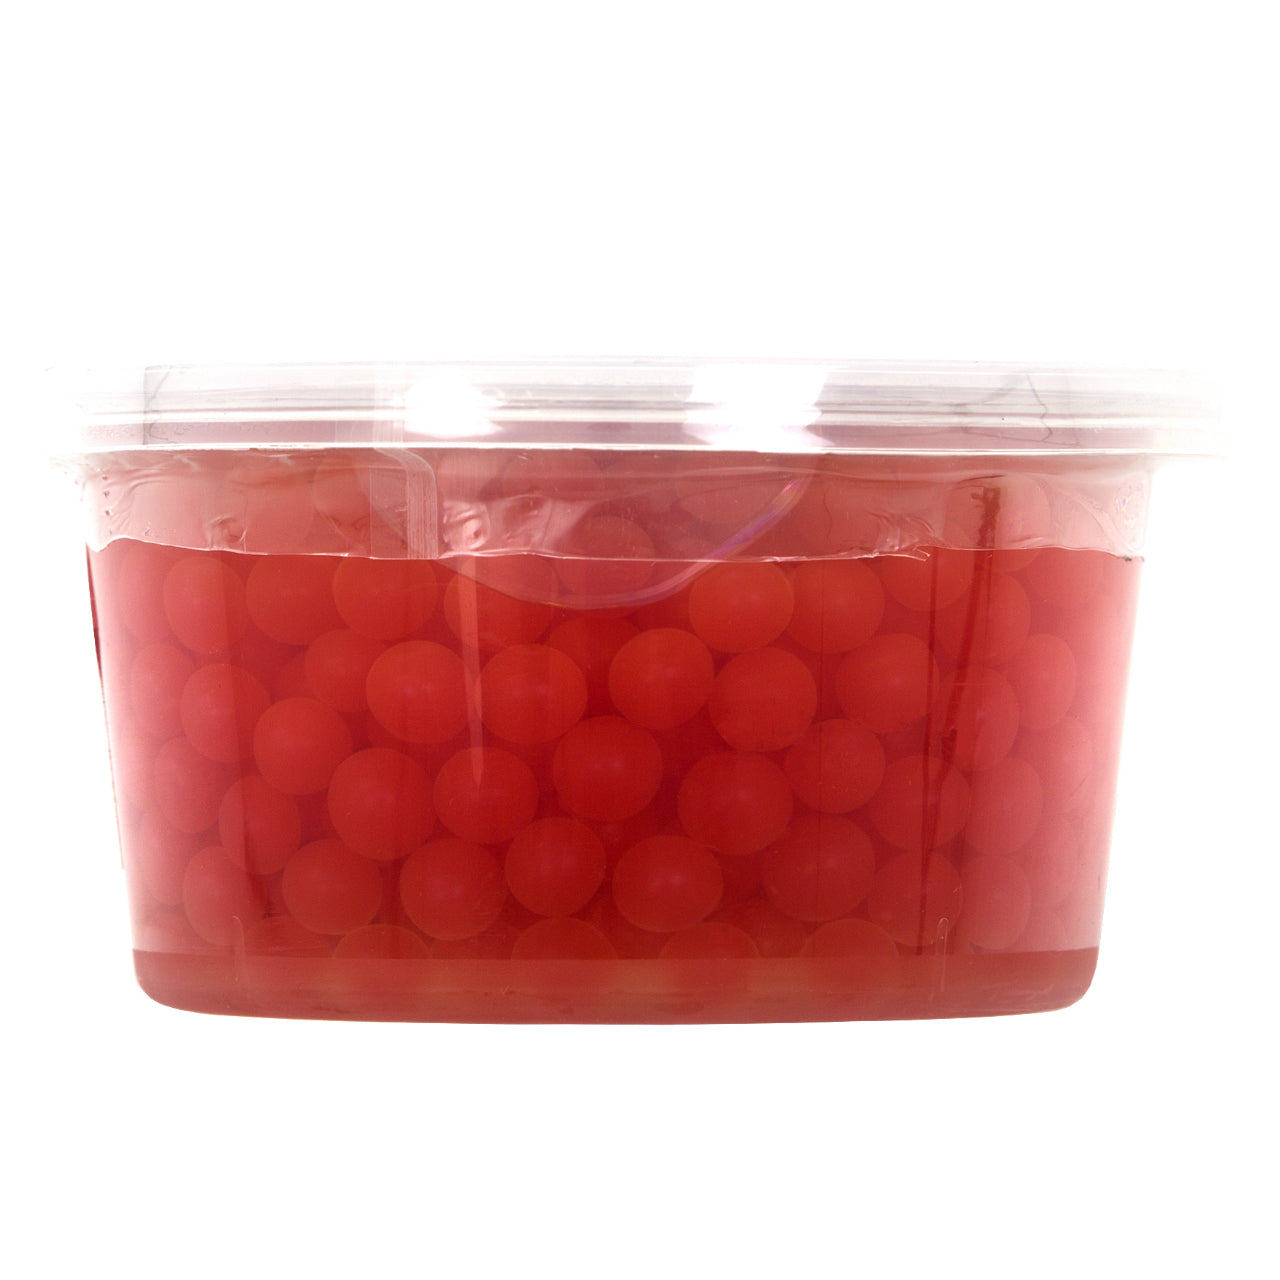 450g  Strawberry Juice Pobbles for Bubble Tea